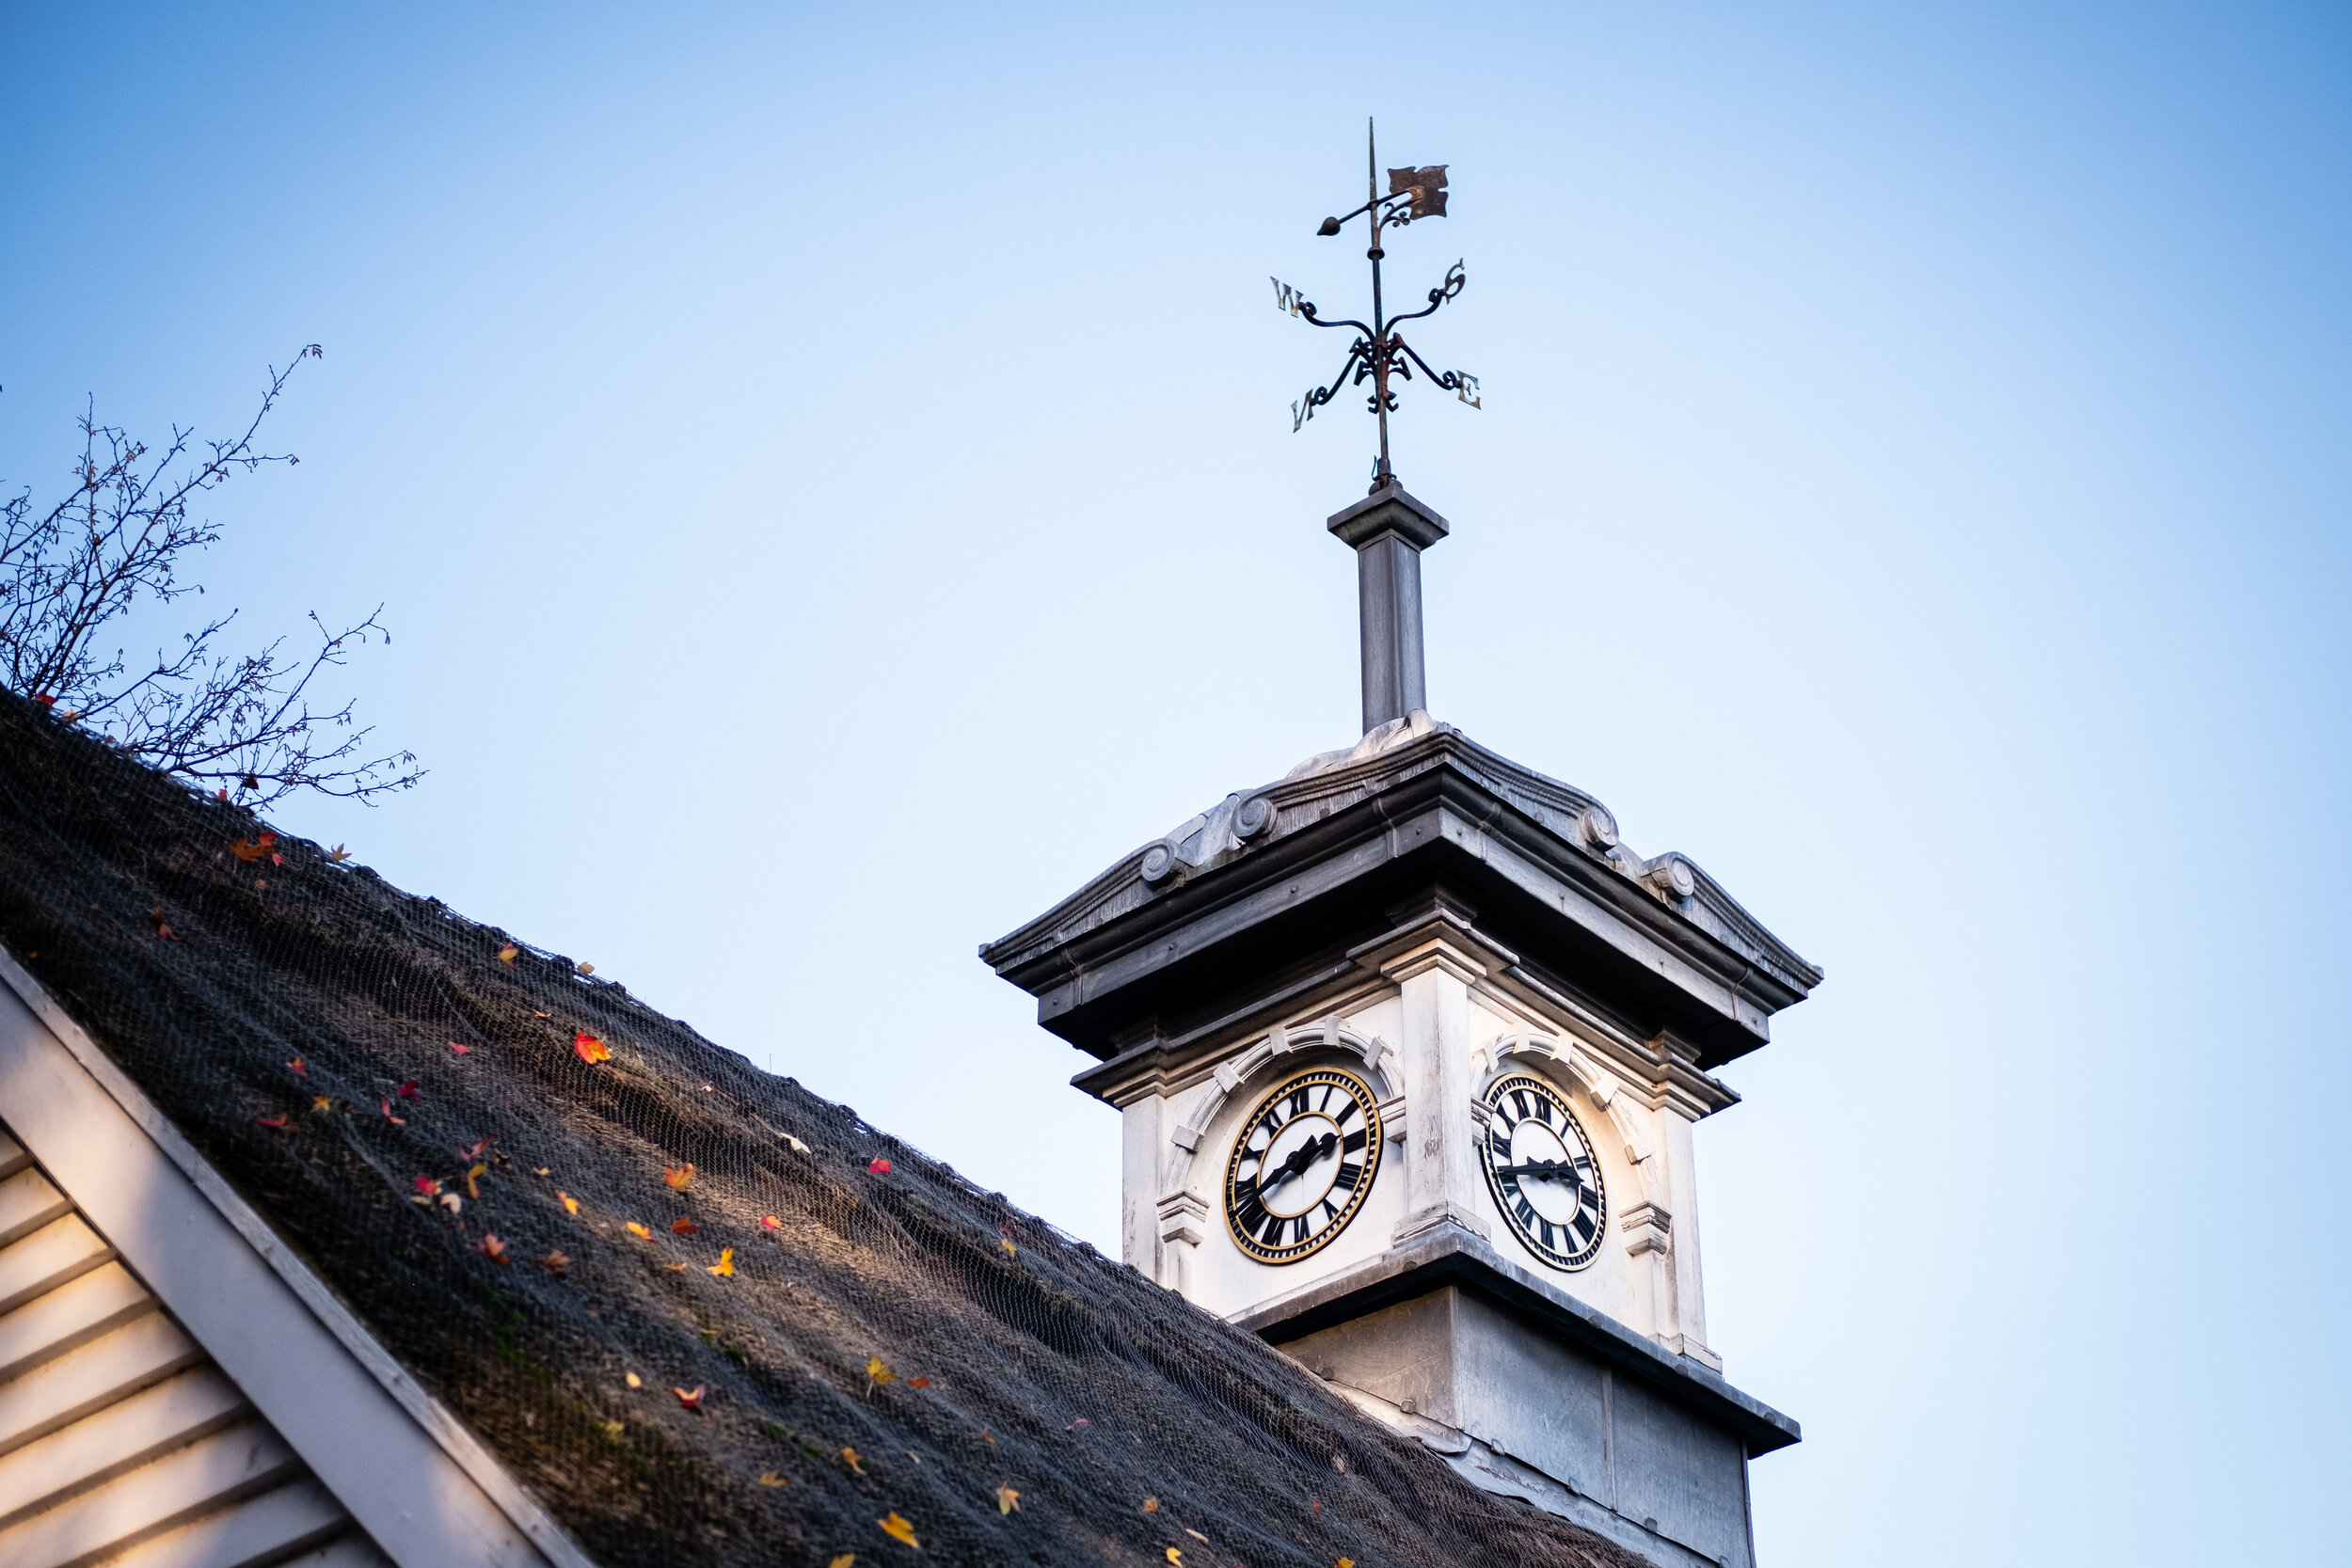 The Clockhouse, Rowhill Grange, Dartford, Kent